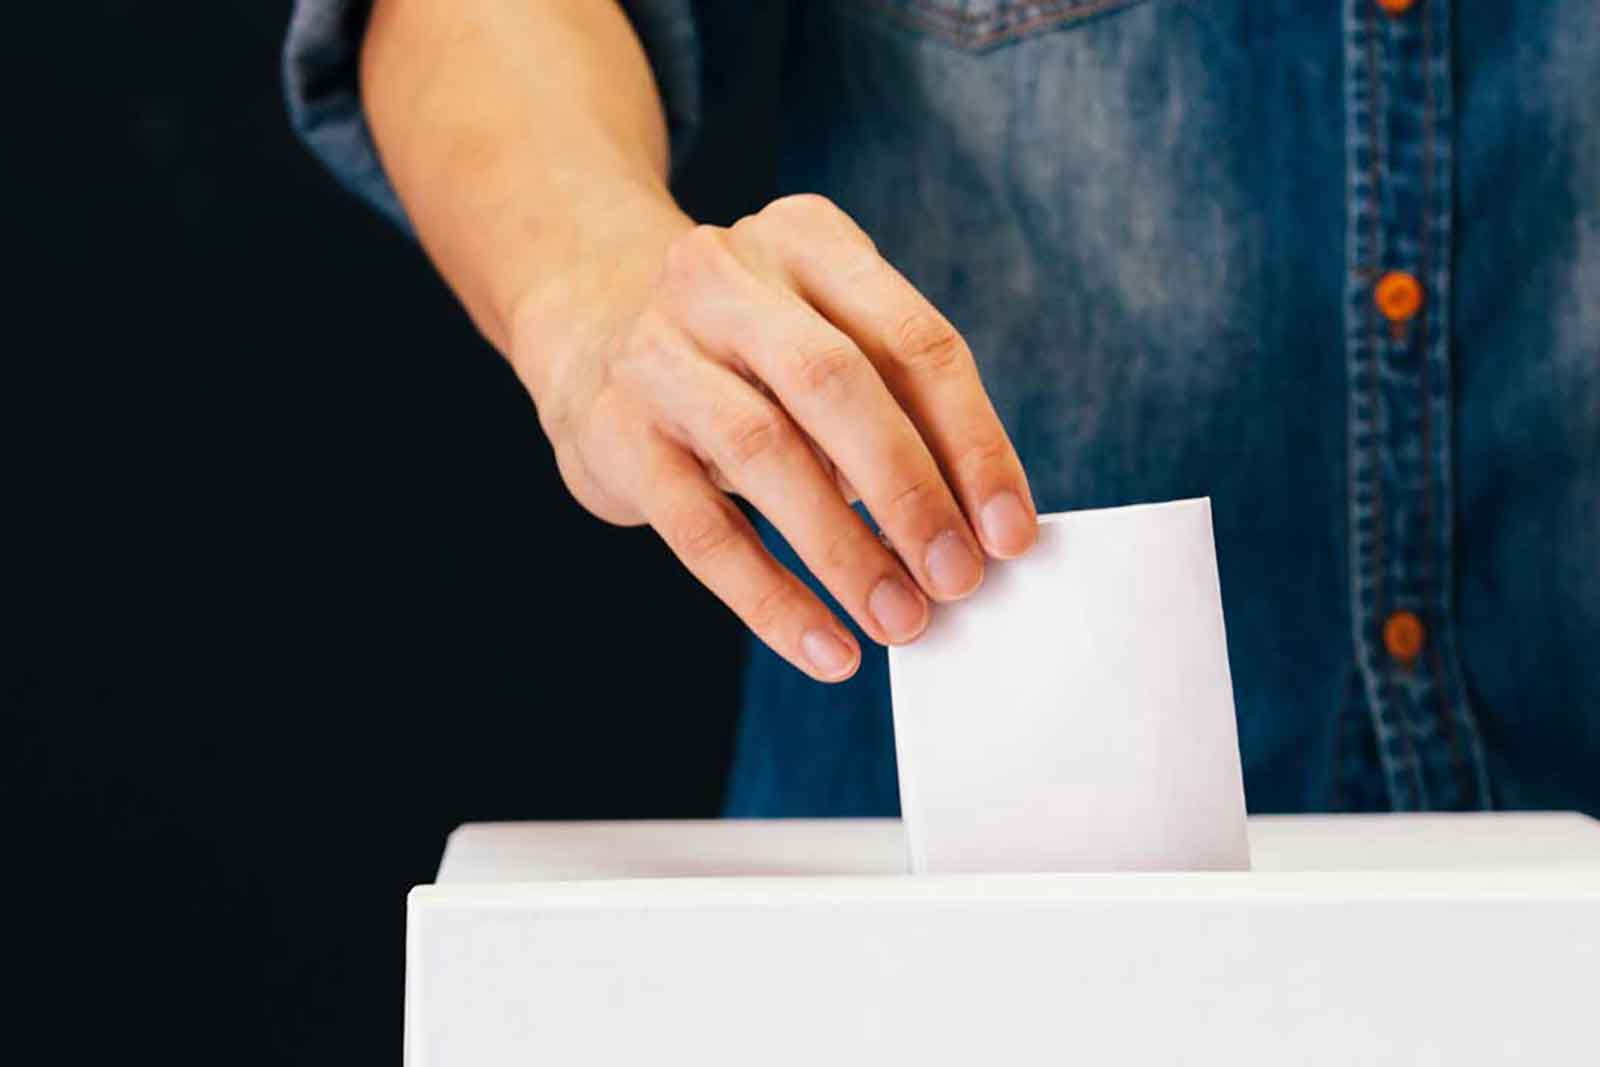 Hand putting ballot in ballot box